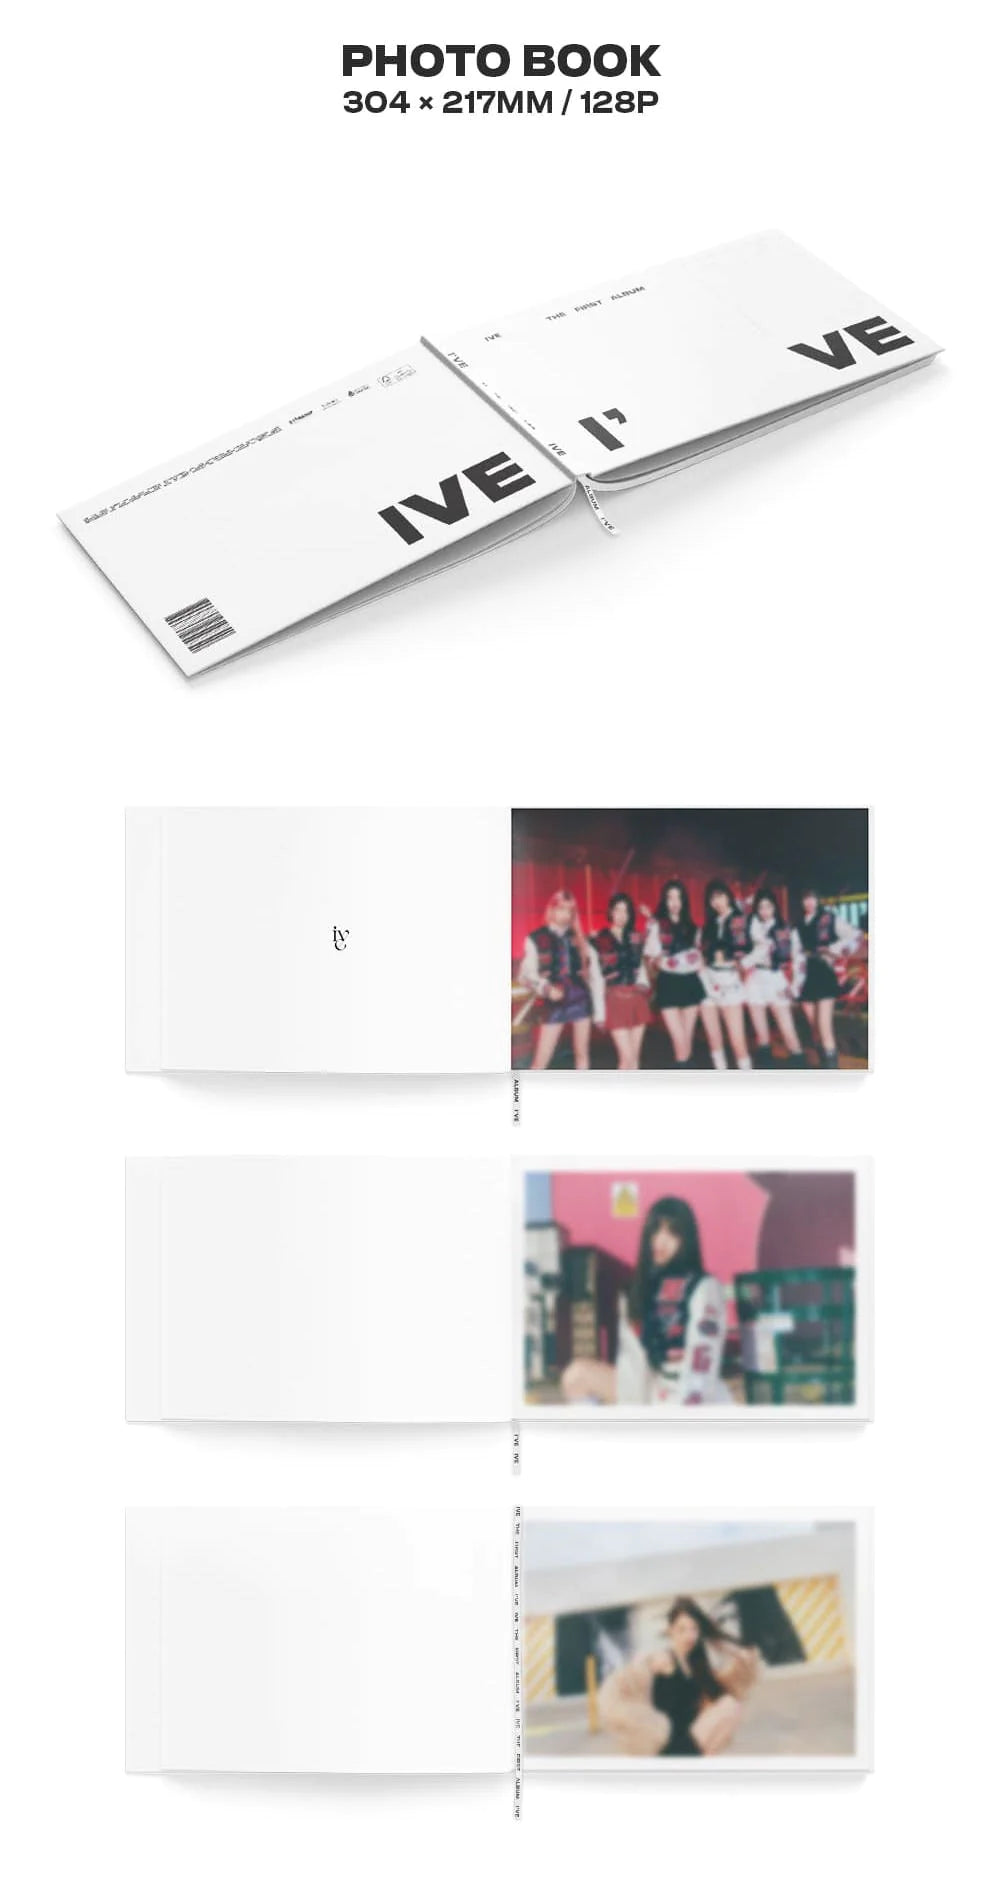 IVE - 1st Full Album 'I'VE IVE' (Special Version)